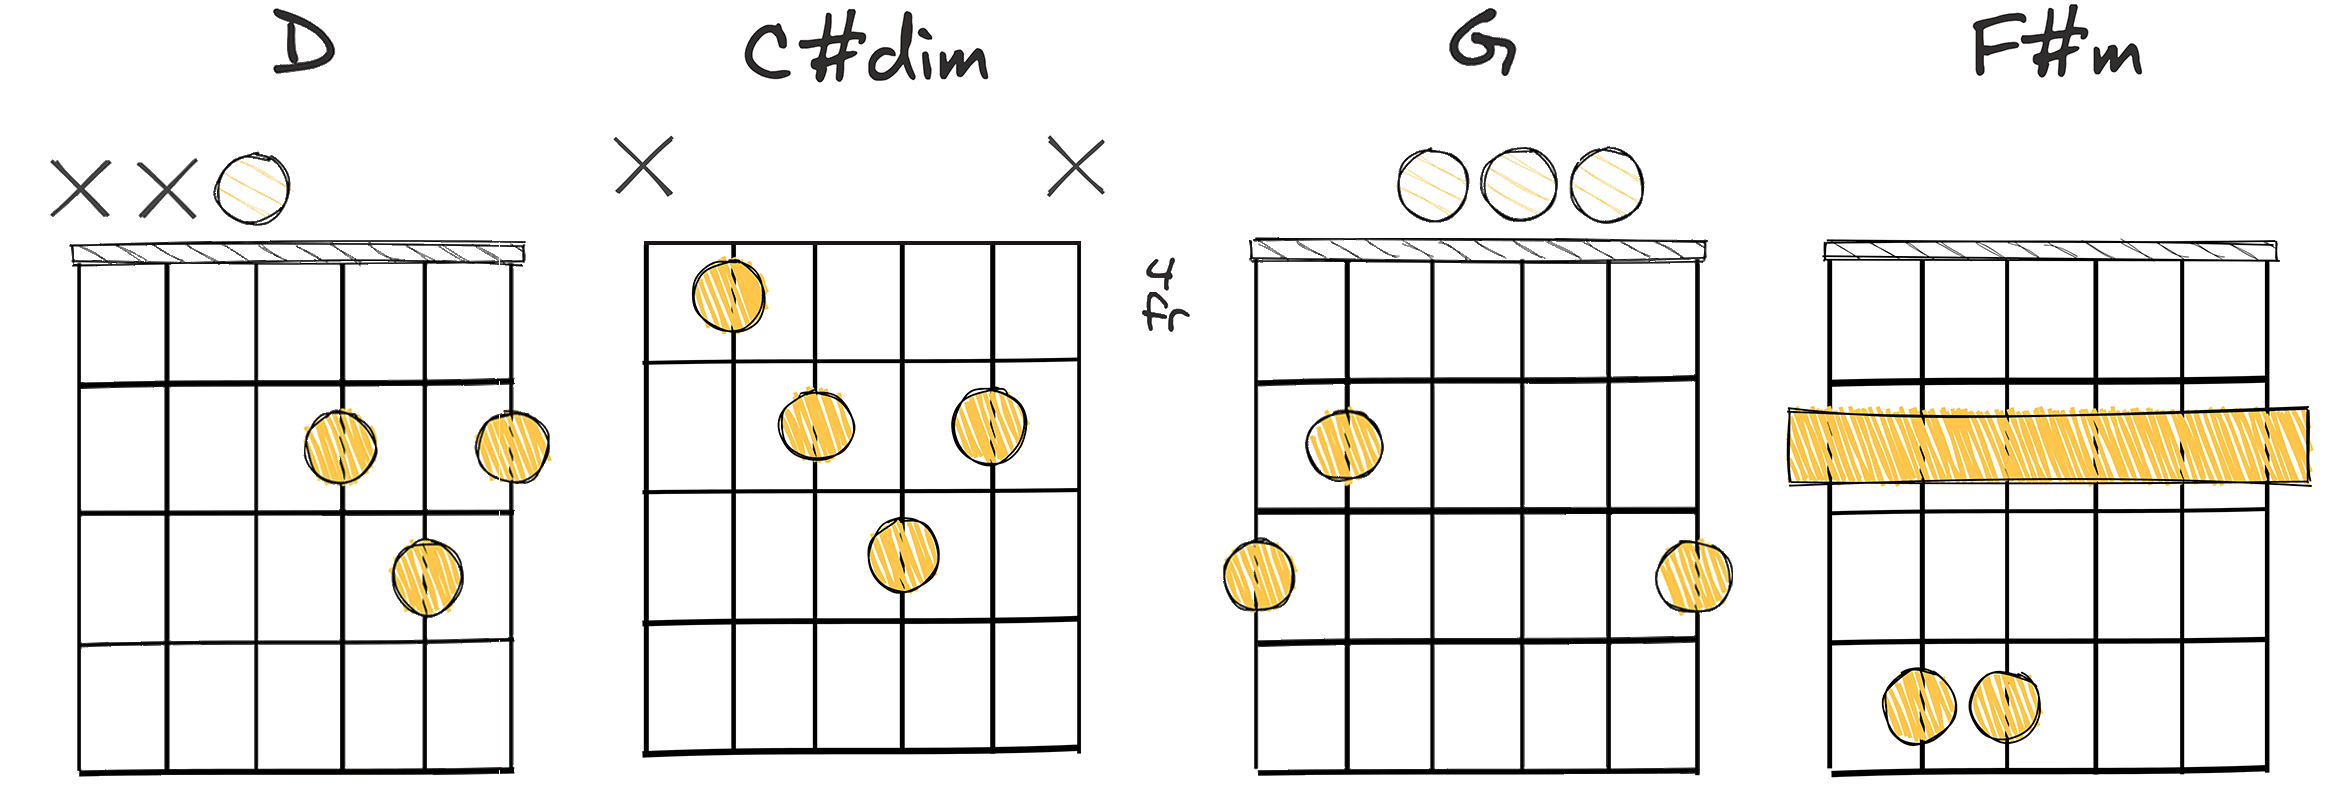 I-vii°-IV-iii (1-7-4-3) chords diagram